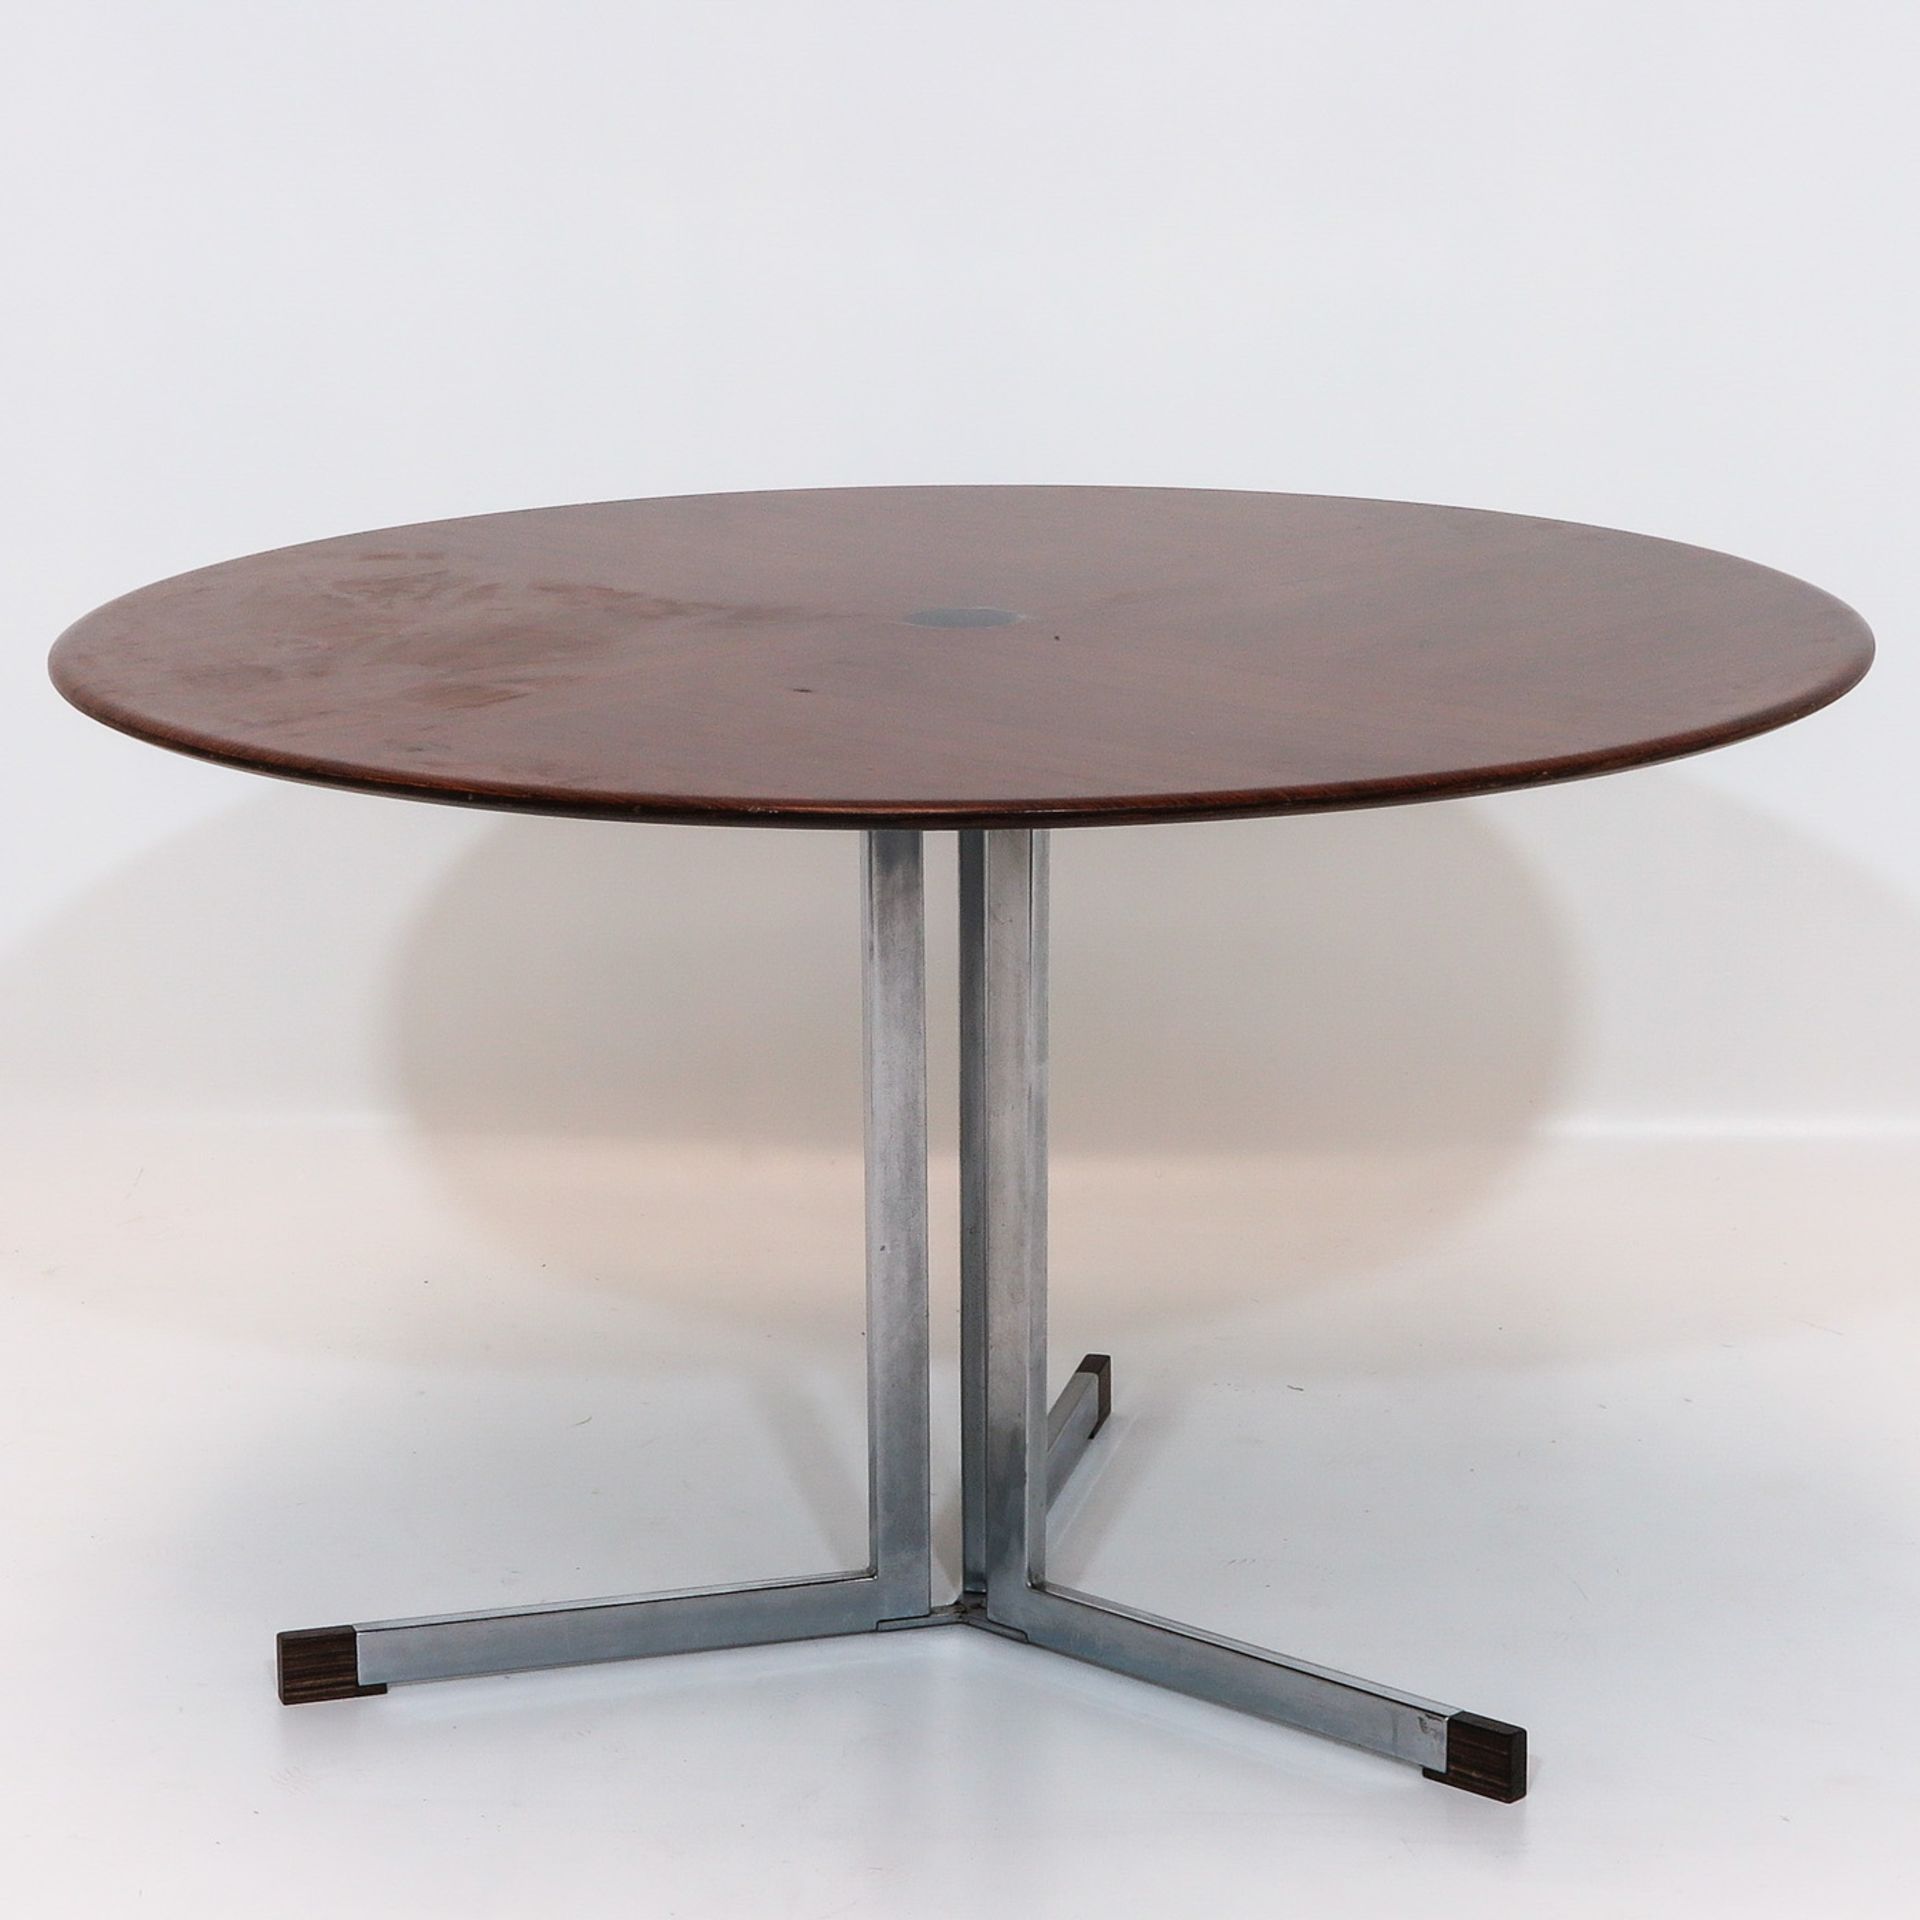 A Designer Table by H. Salomonson